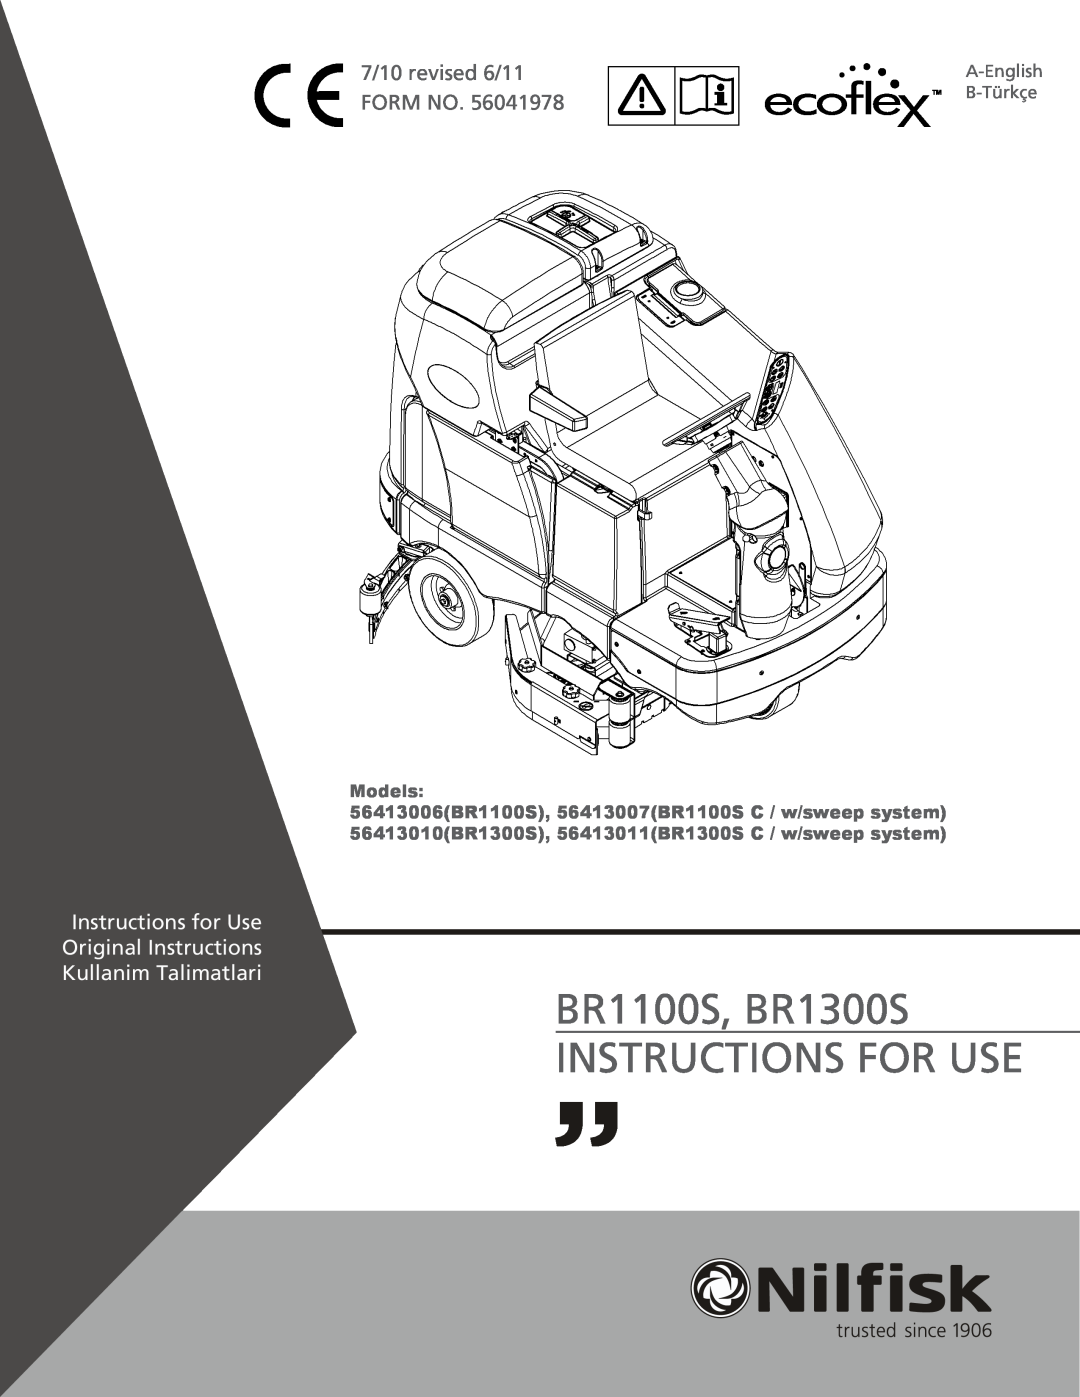 Nilfisk-Advance America manual BR1100S, BR1300S INSTRUCTIONS FOR USE, 7/10 revised 6/11 FORM NO, Kullanim Talimatlari 